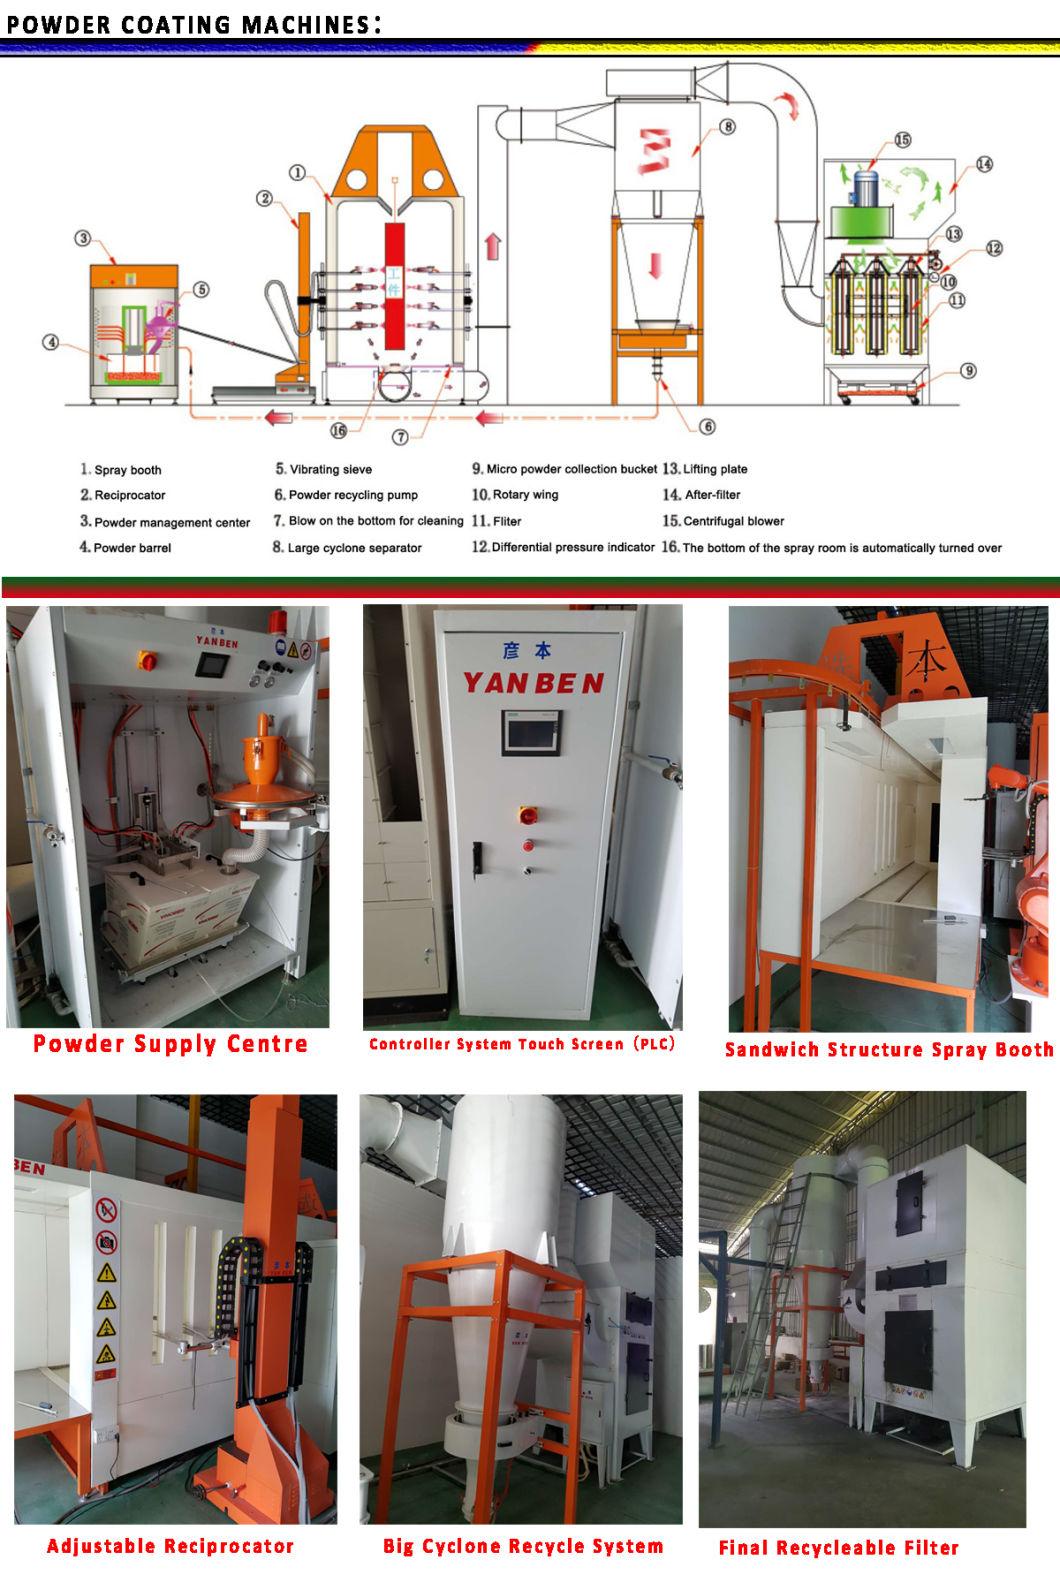 Horizontal Aluminum Extrusion Powder Coating System Manufacturer in China